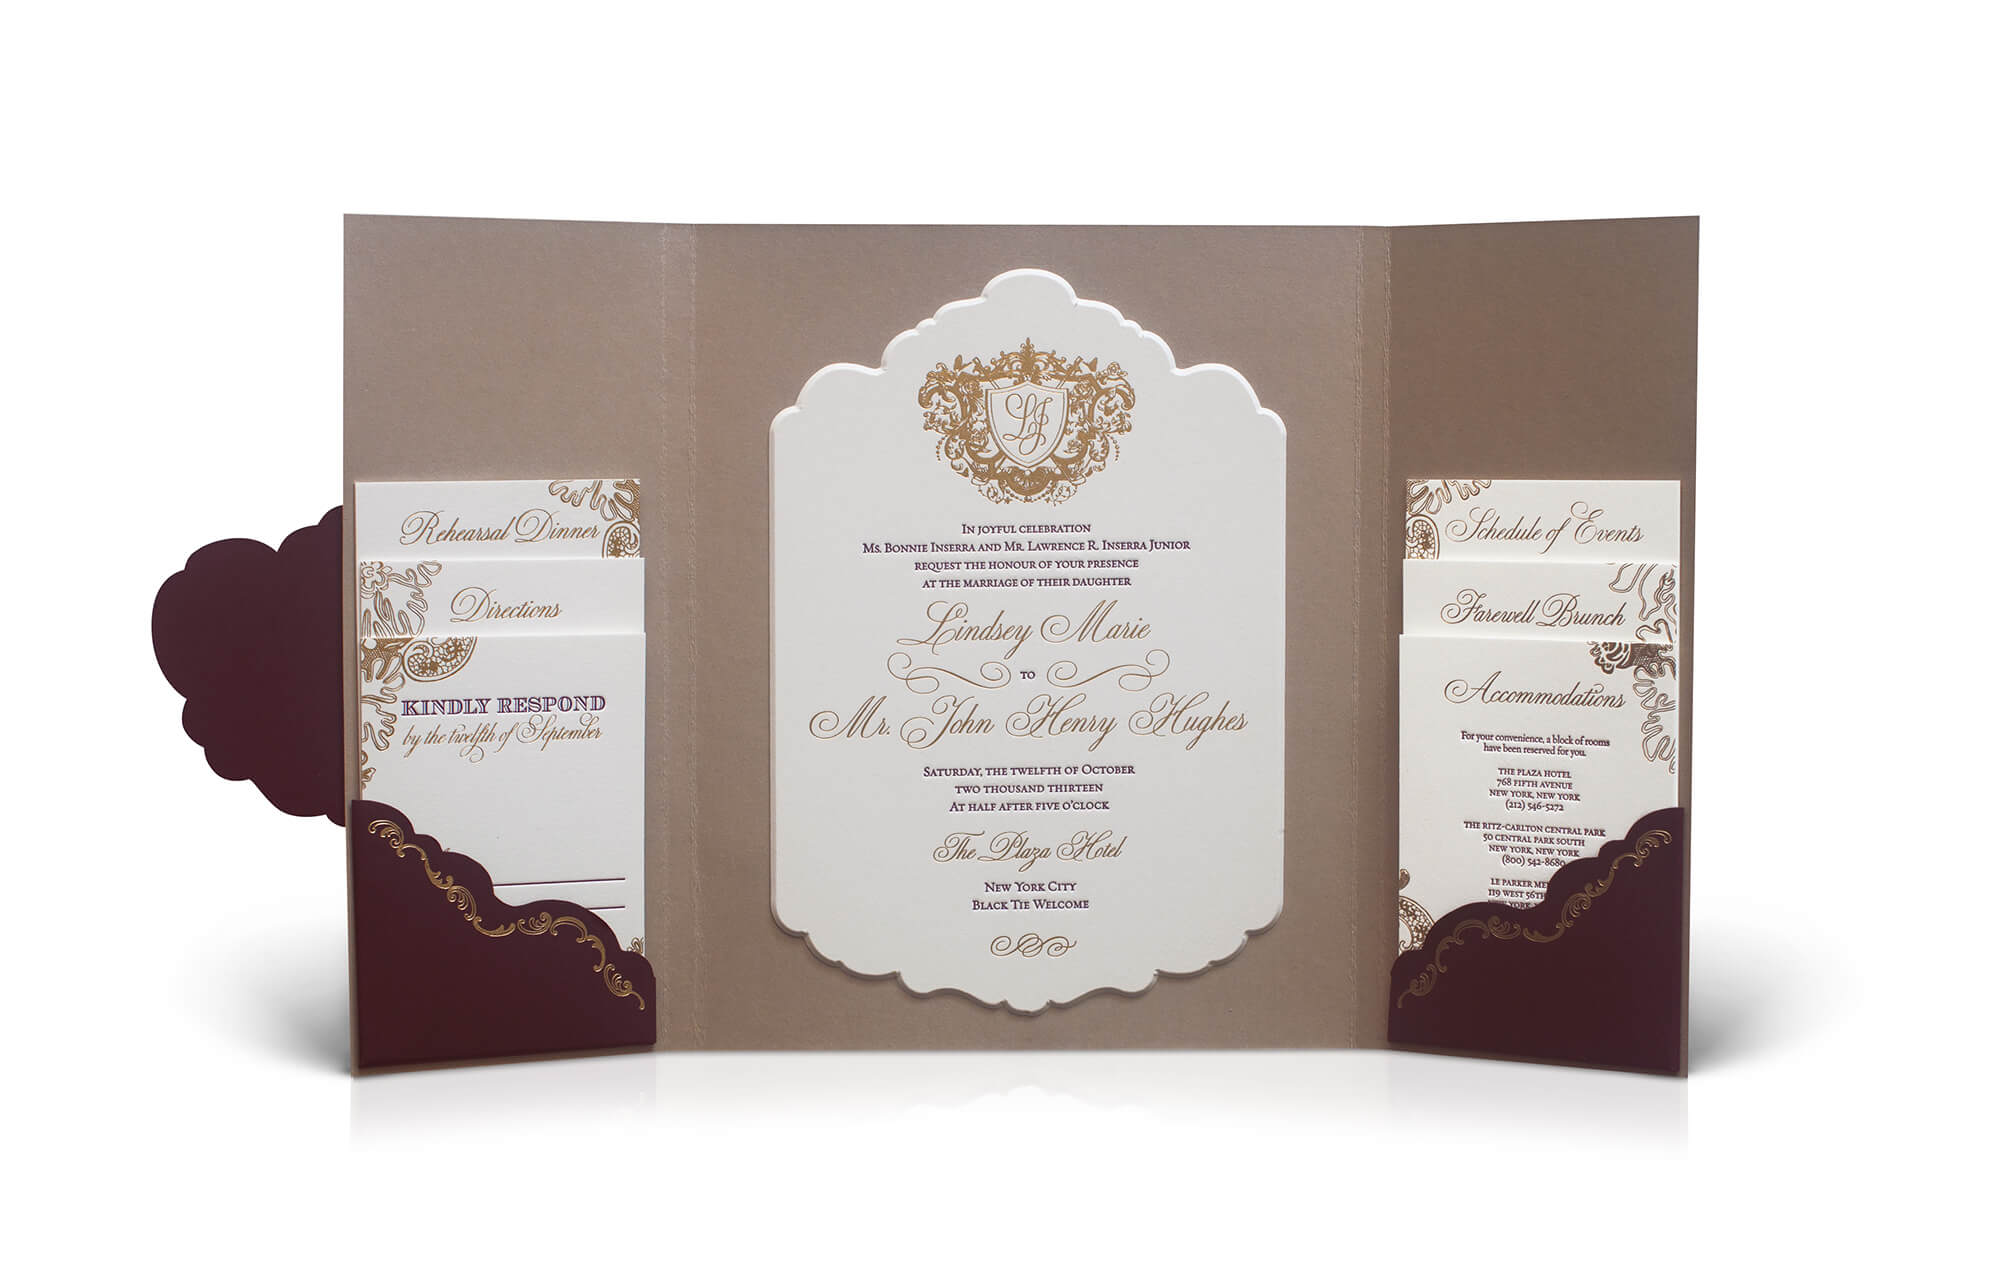 Plaza Hotel wedding invitation with folder and scalloped edges